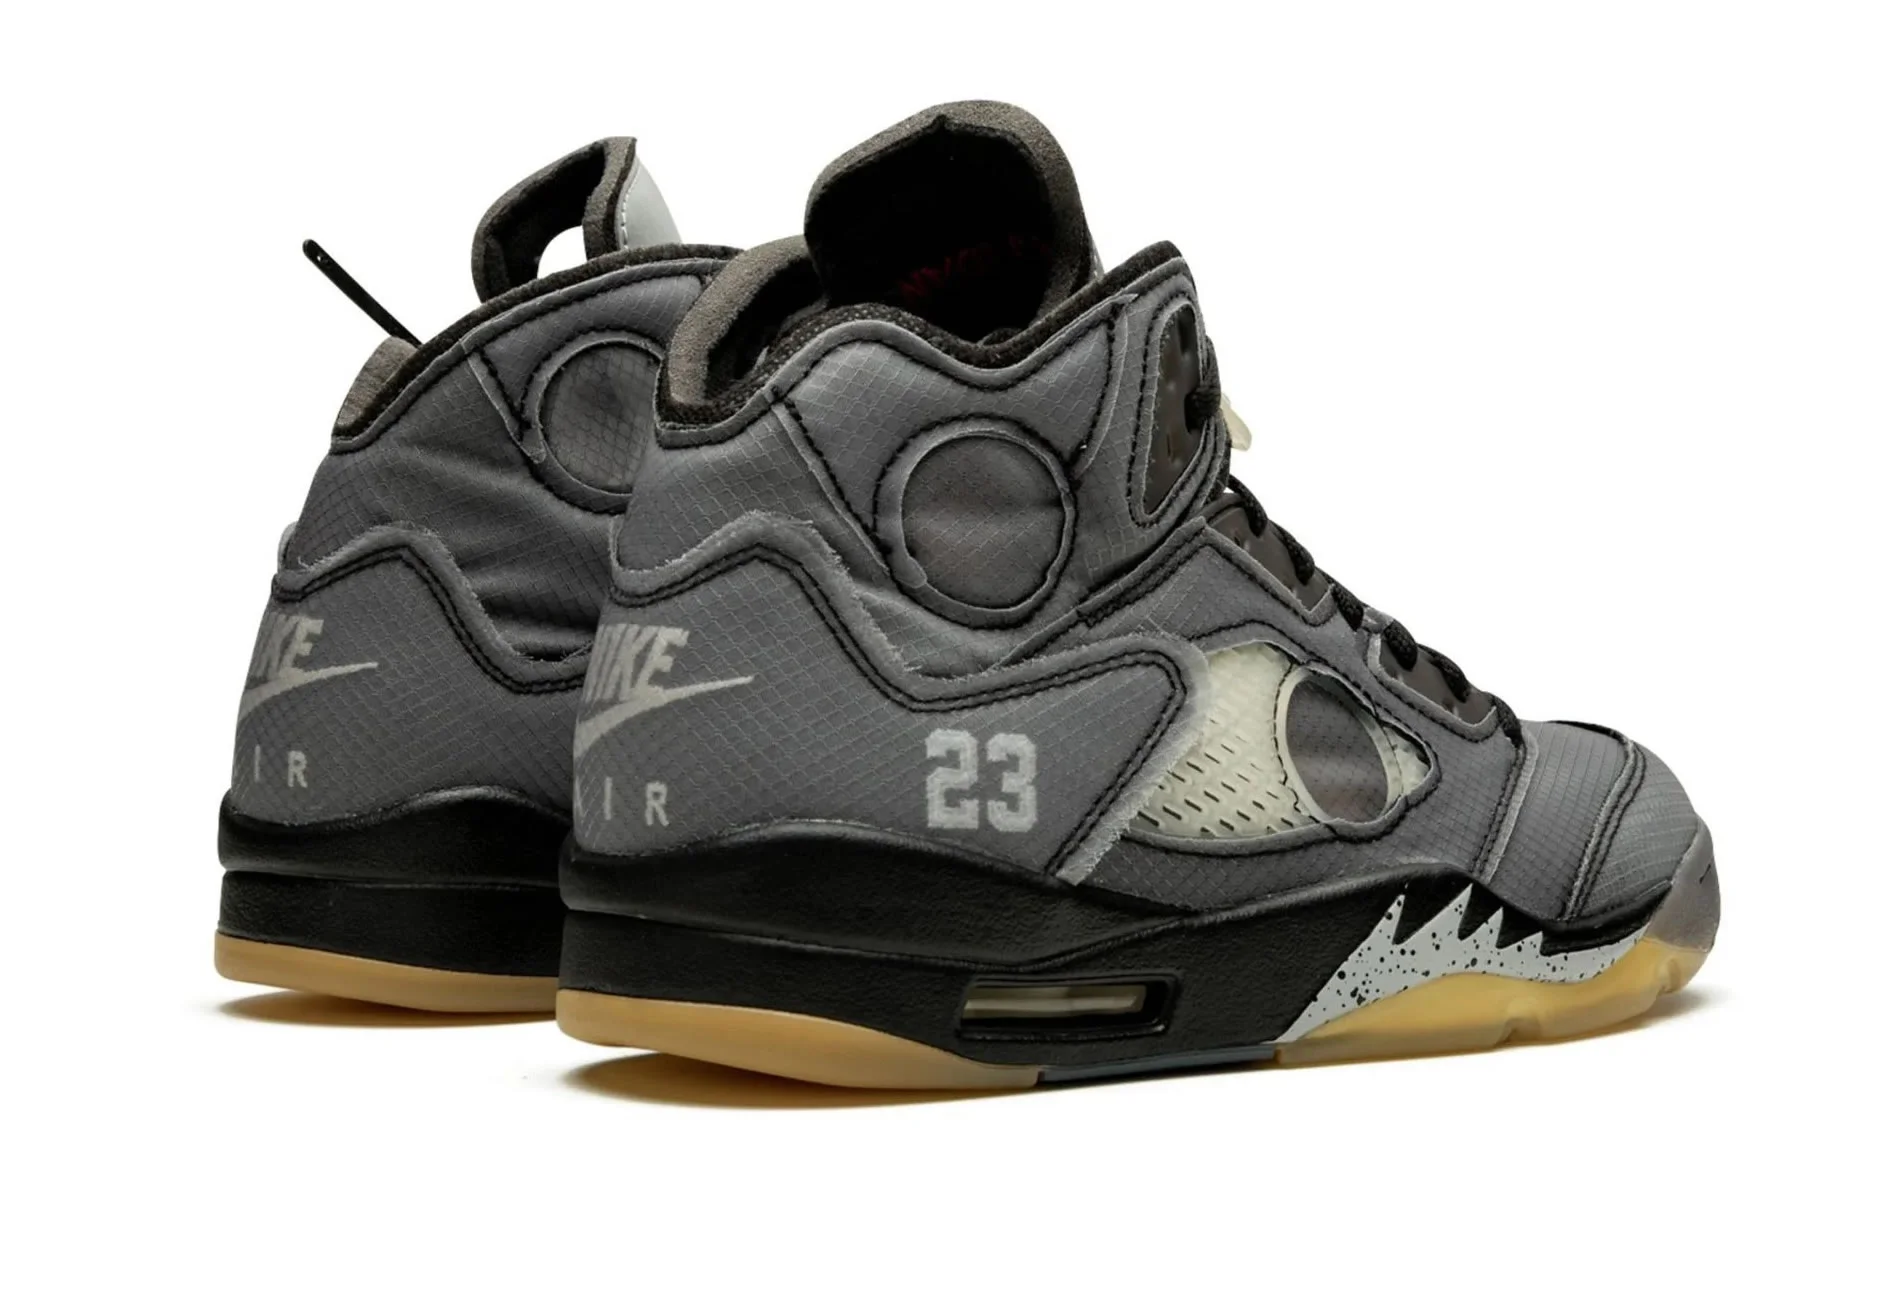 Air Jordan 5 Retro Sp Off White Ct8480 001 Ljr Batch Sneakers (4) - www.ljrofficial.com